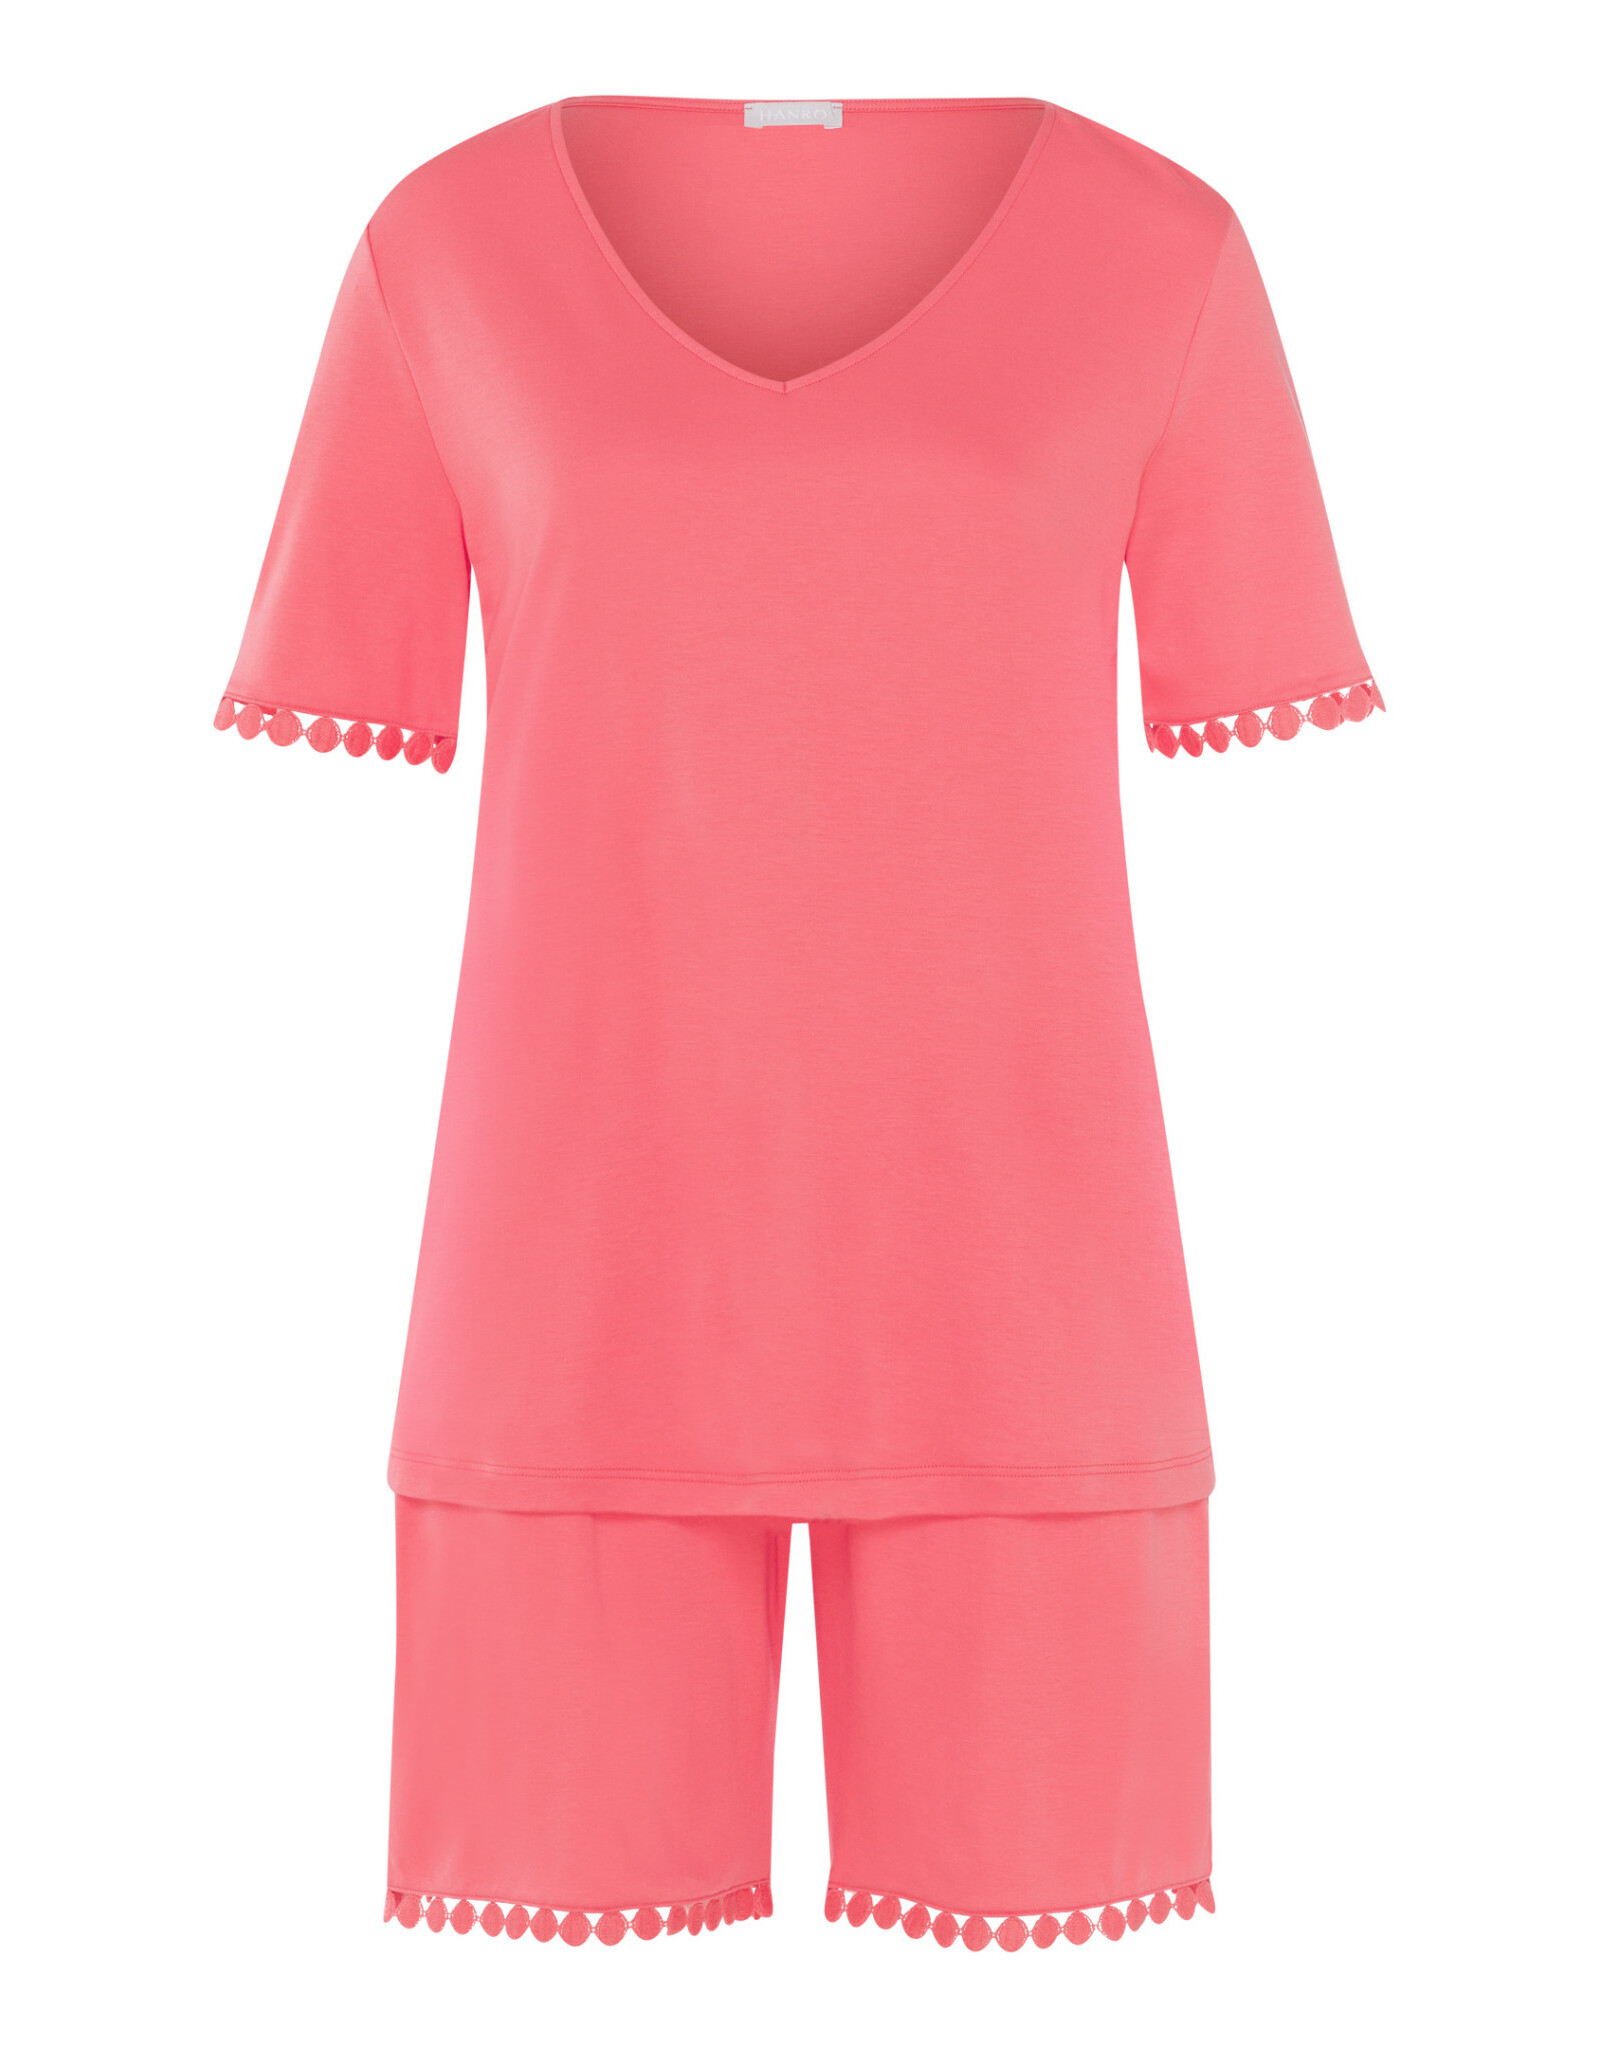 Hanro Rosa Short Pyjama Set